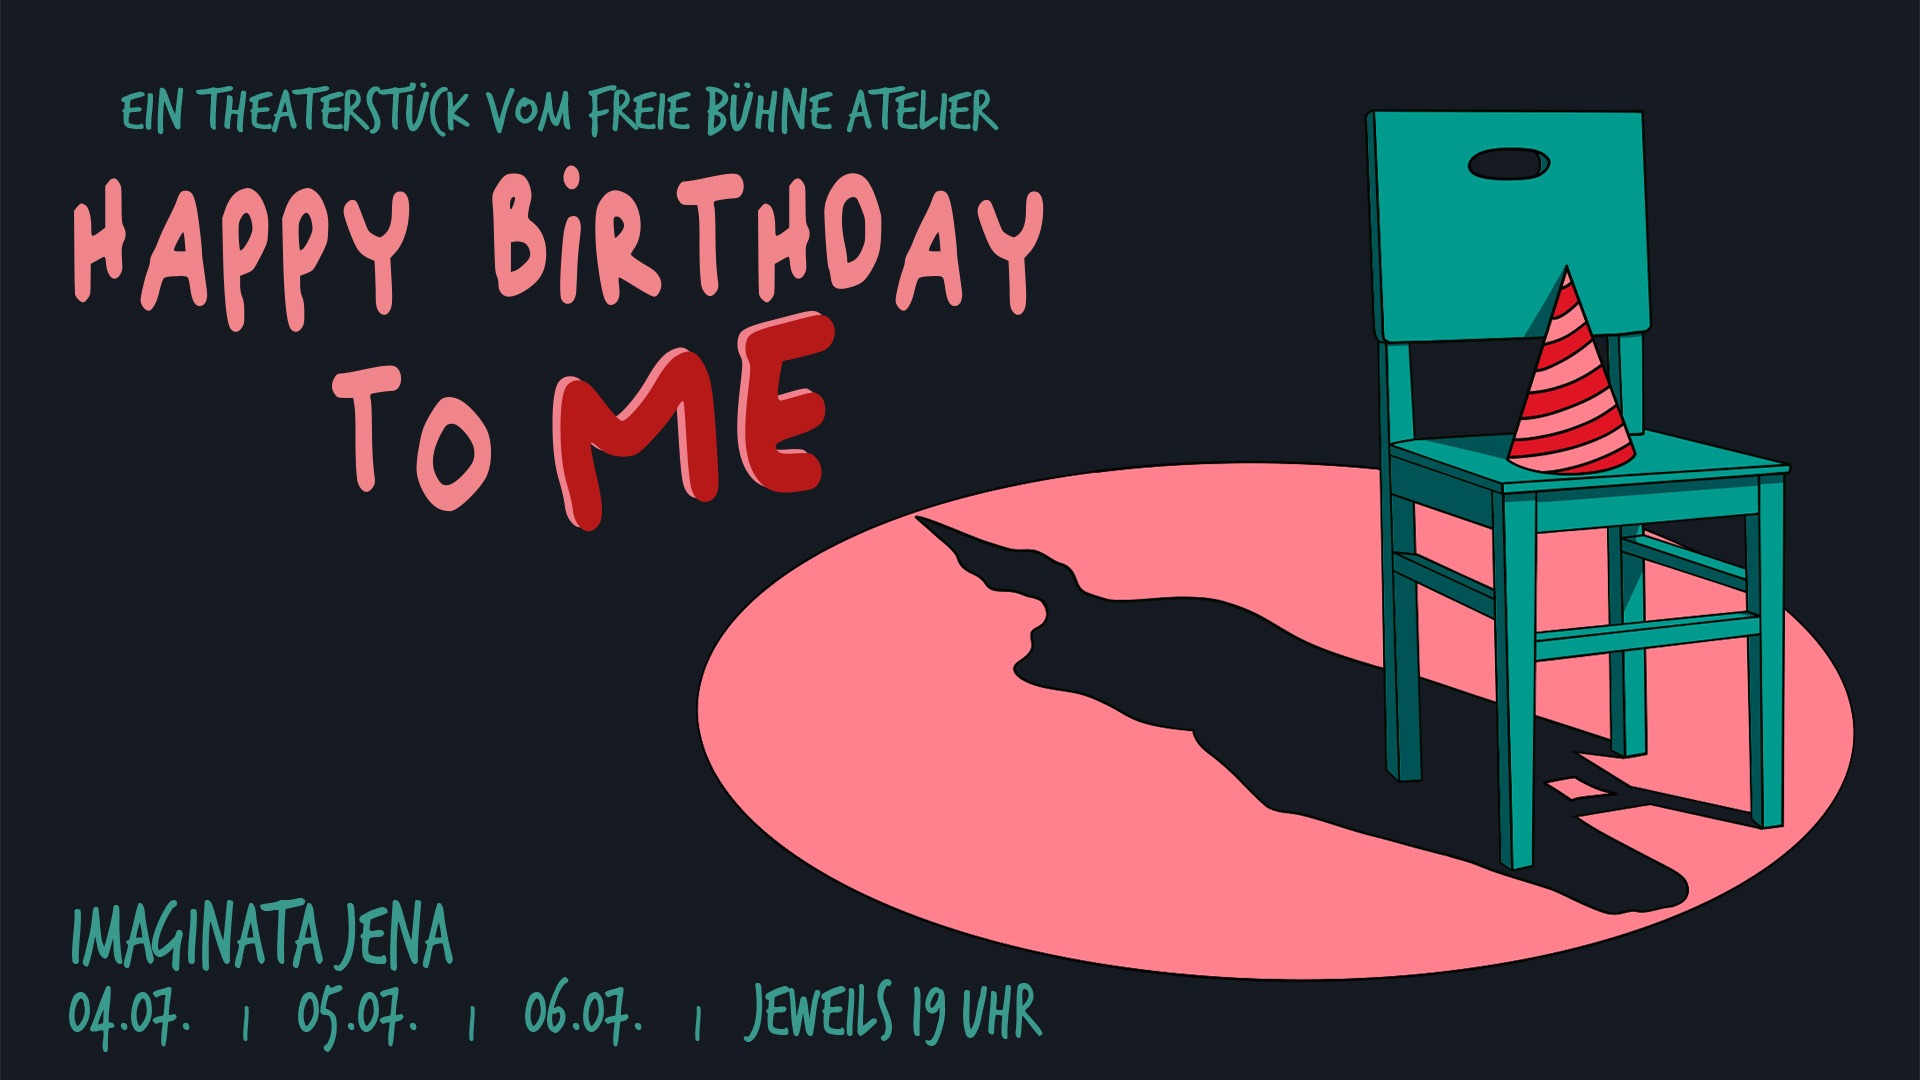 Happy Birthday to Me - Theaterstück des Freie Bühne Ateliers